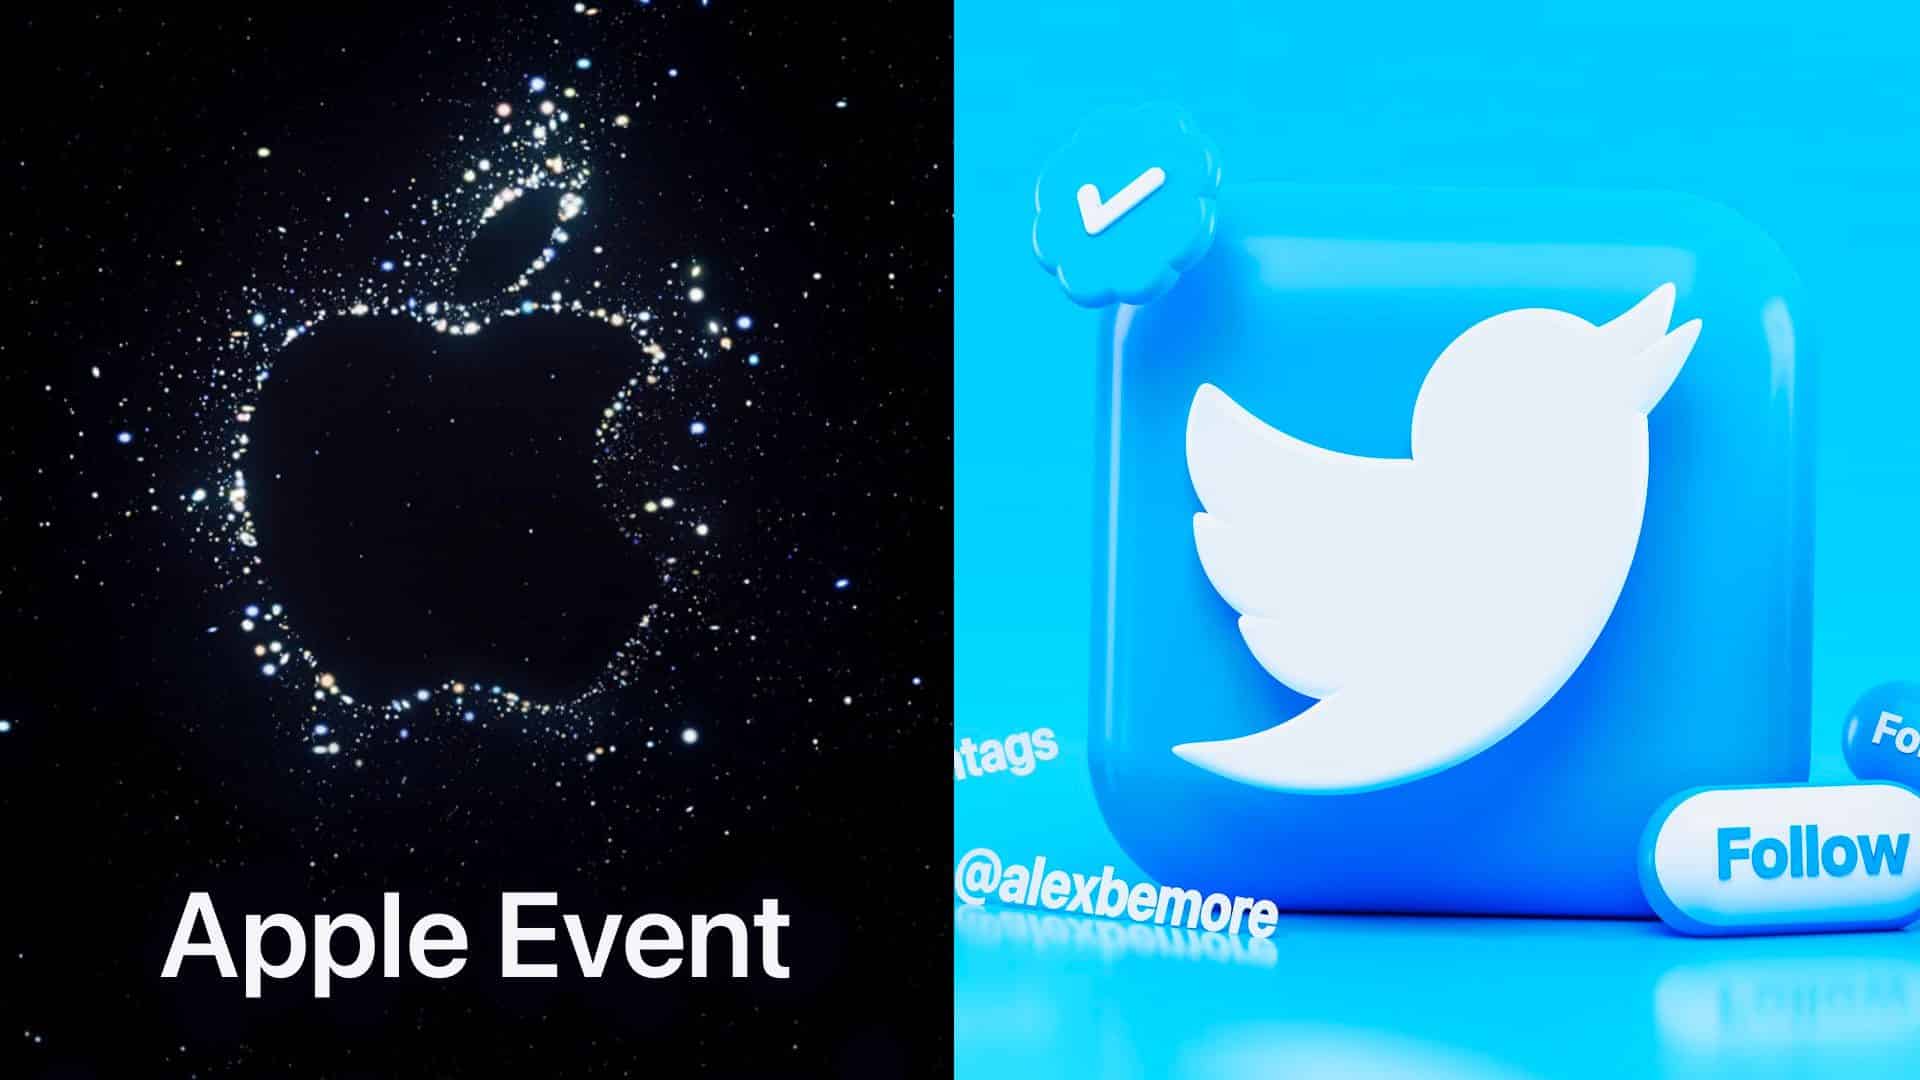 Apple Event Twitter